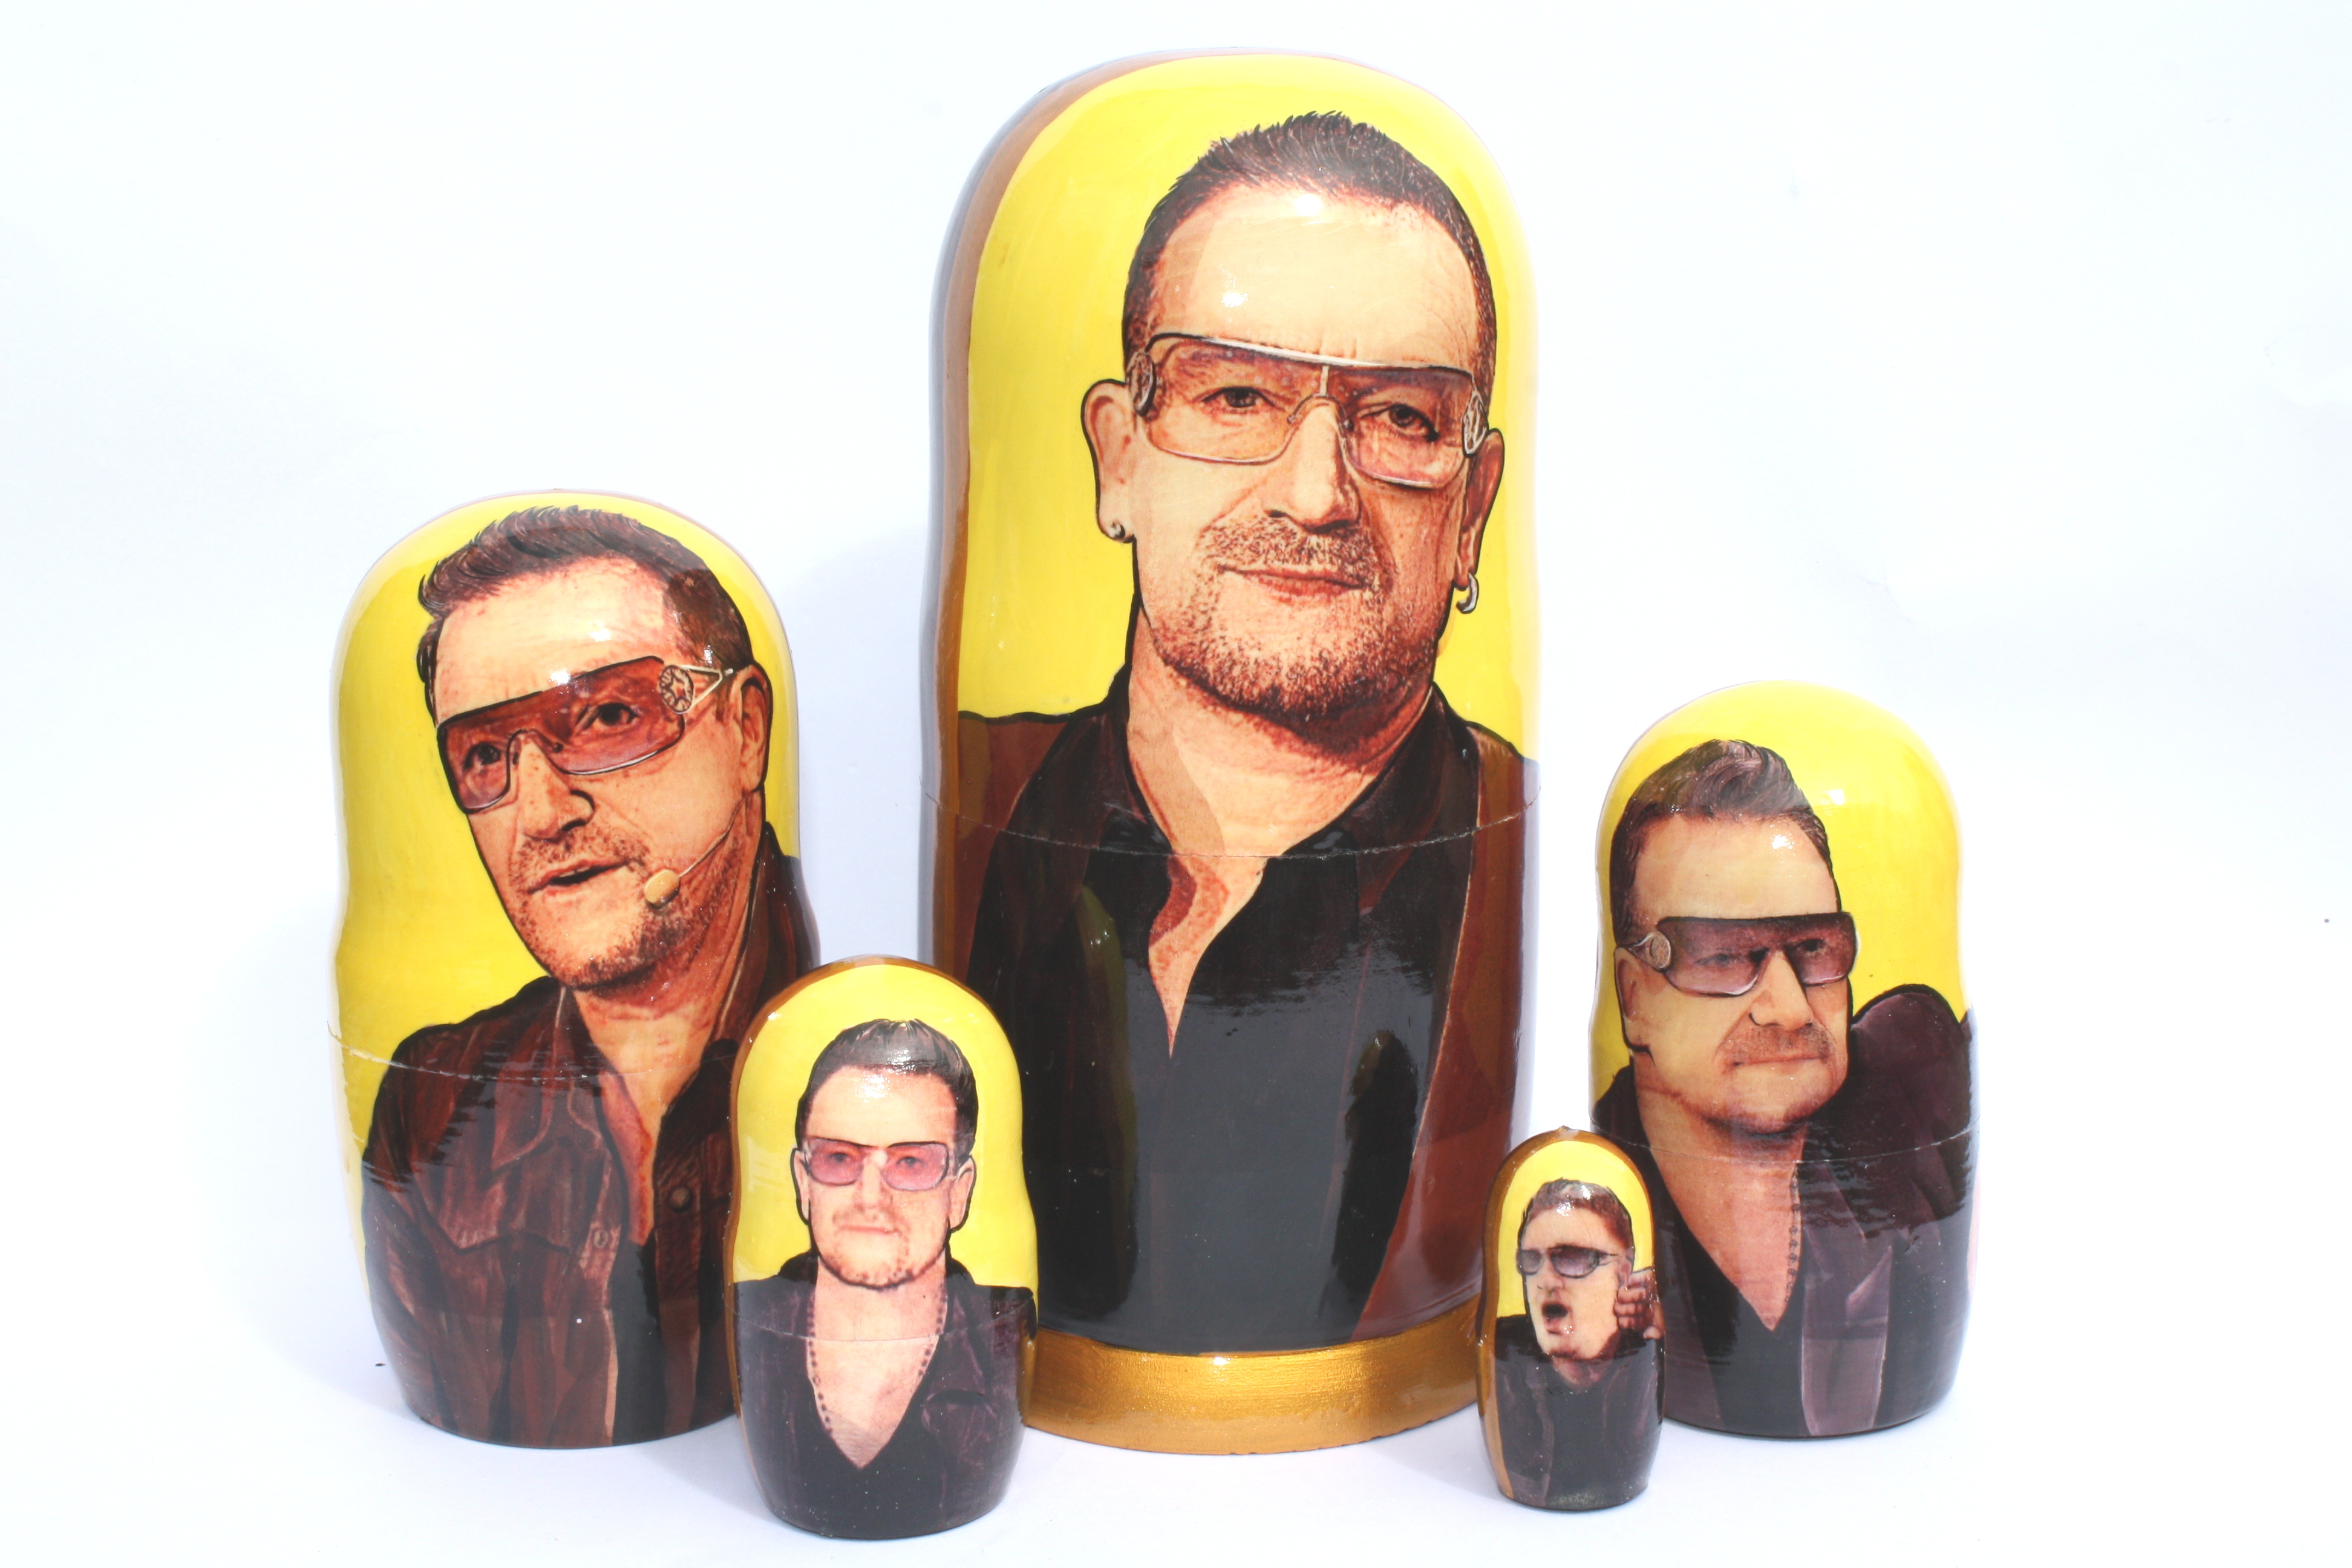 A 5 nested set of celebrities, U2